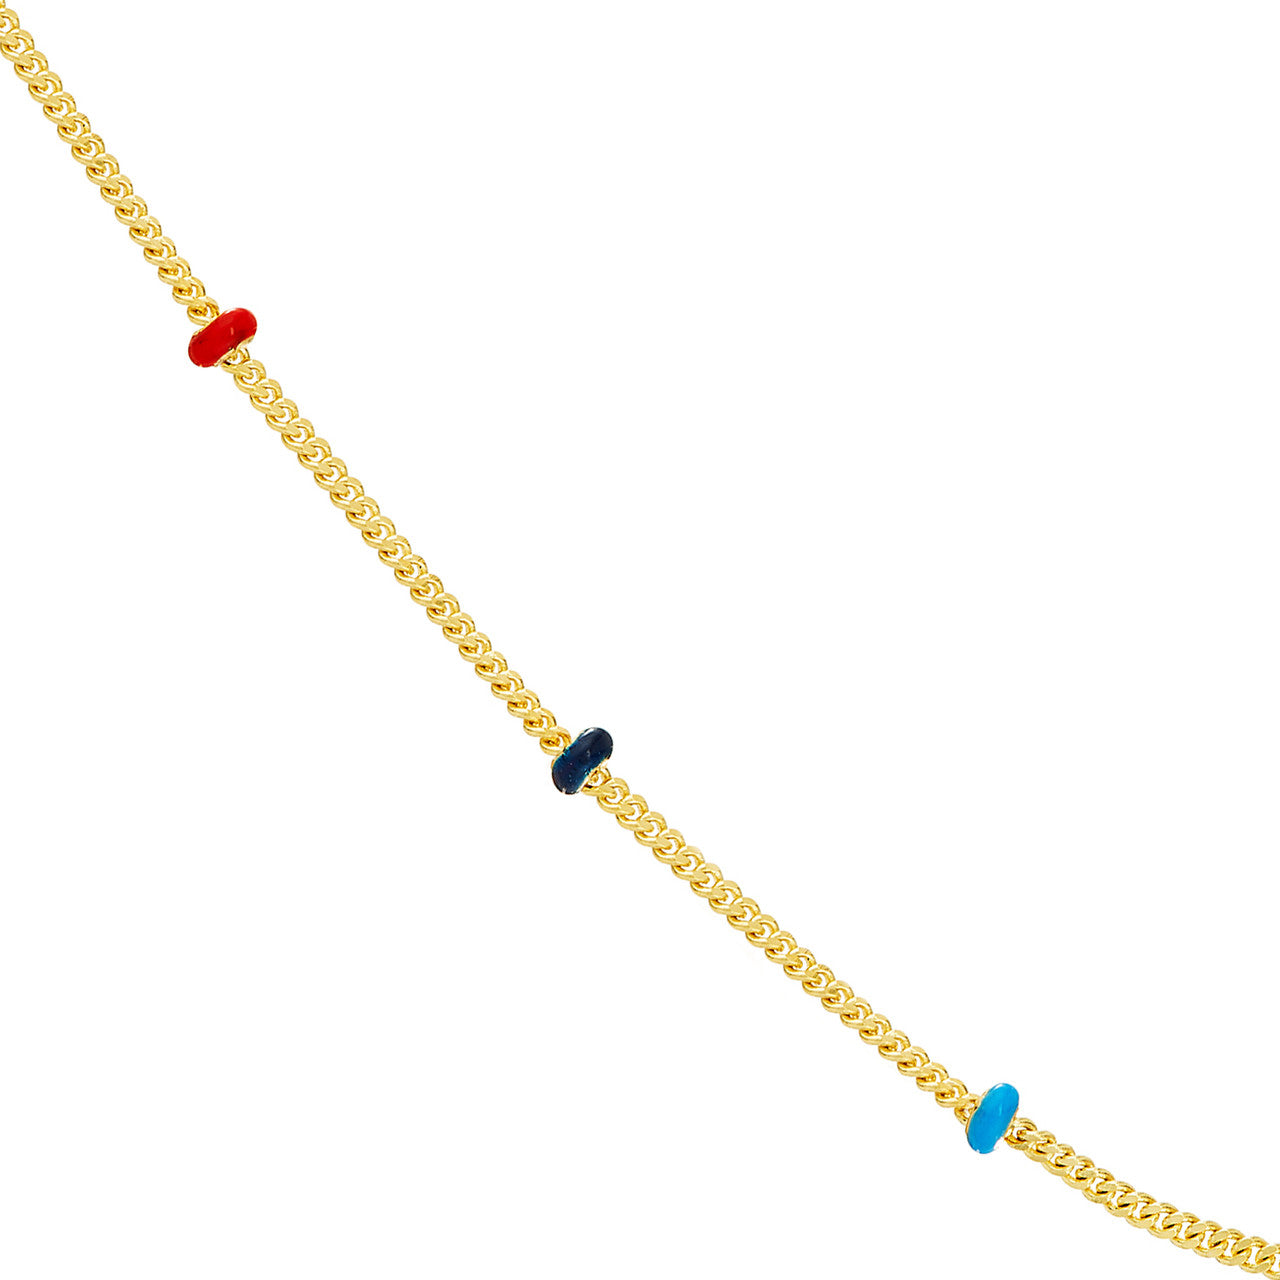 Tri-color Enamel Bead Chain Necklace